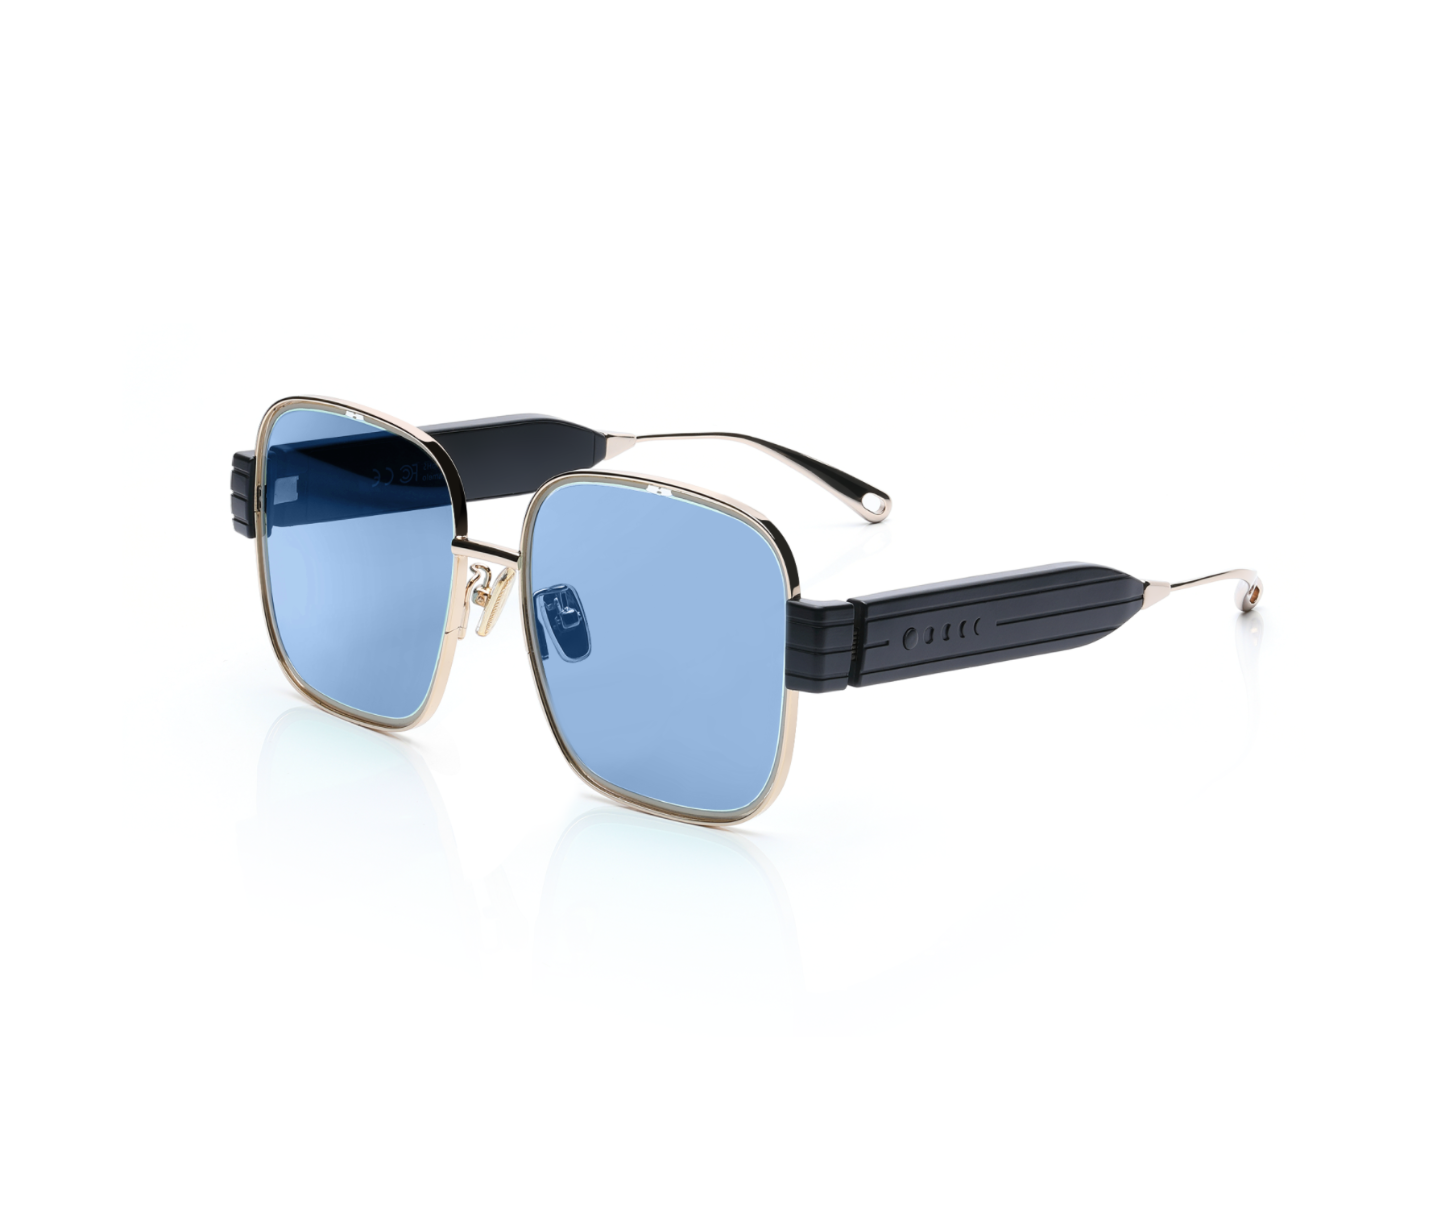 CHRISTELLE AND SOSO 2 Pcs Polarized Sports Sunglasses for men